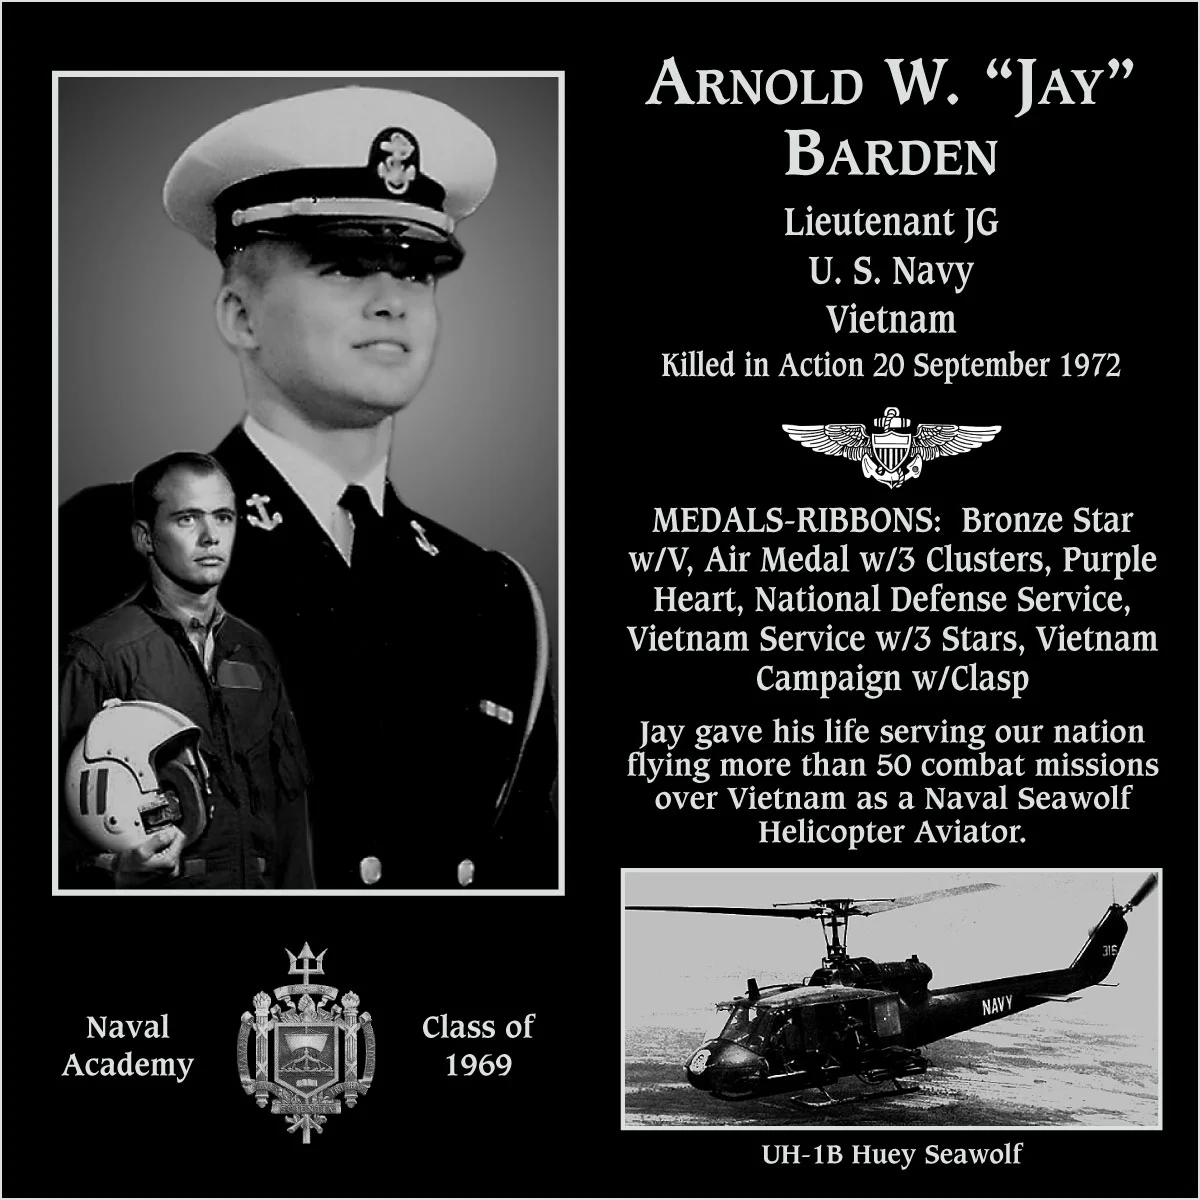 Arnold W “Jay” Barden, jr